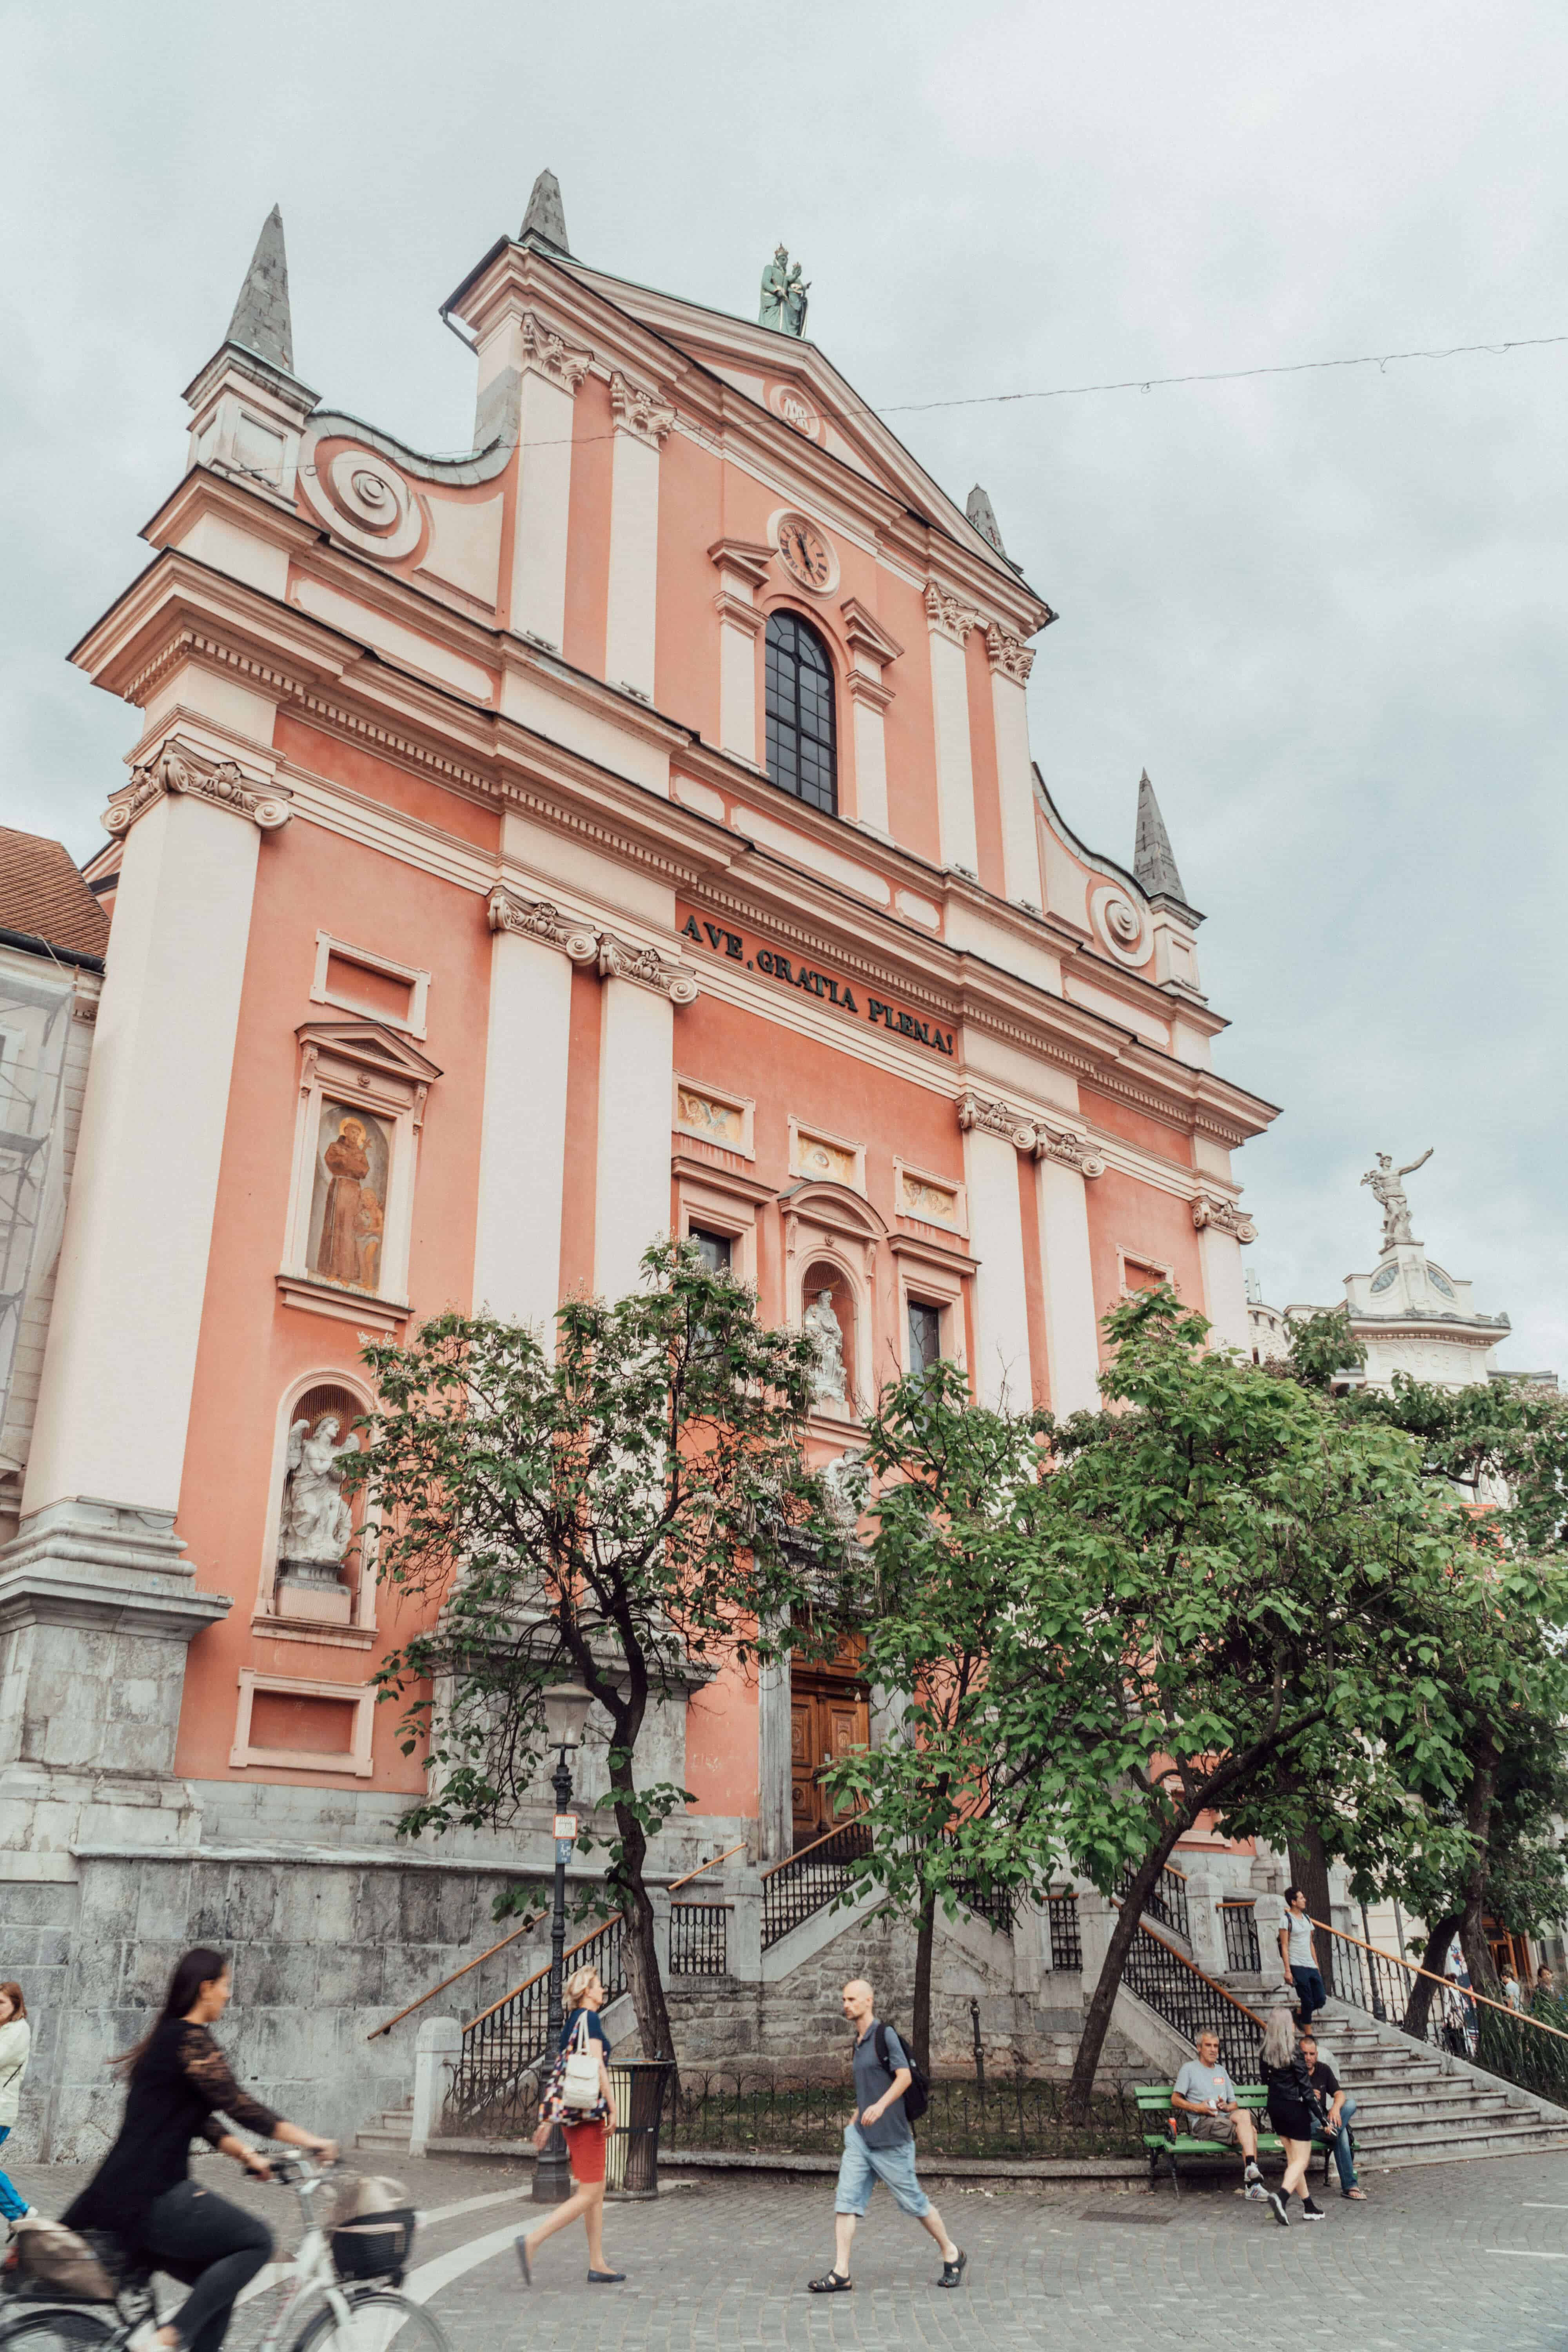 How to Spend One Day in Ljubljana Slovenia | Cathedral | The Republic of Rose | #Ljubljana #Slovenia #Travel #Europe